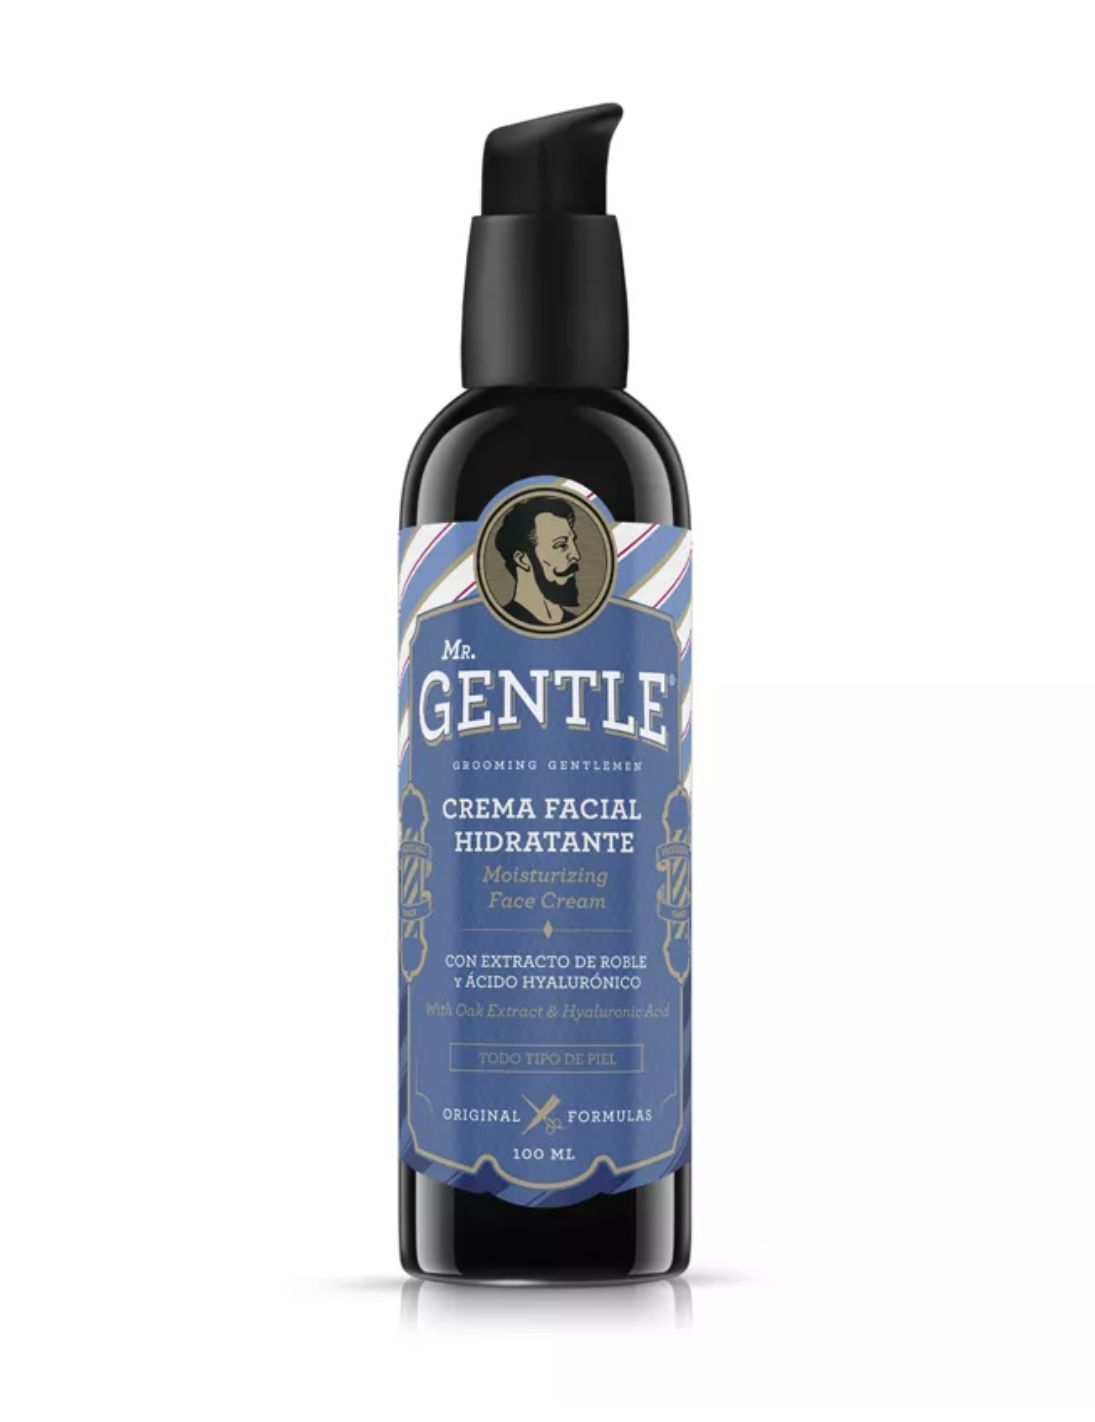 Gentle gel. Mr. gentle крем антивозрастной для лица. Mr gentle косметика для мужчин. Мужской шампунь Mr gentle. Gentle мужской крем.